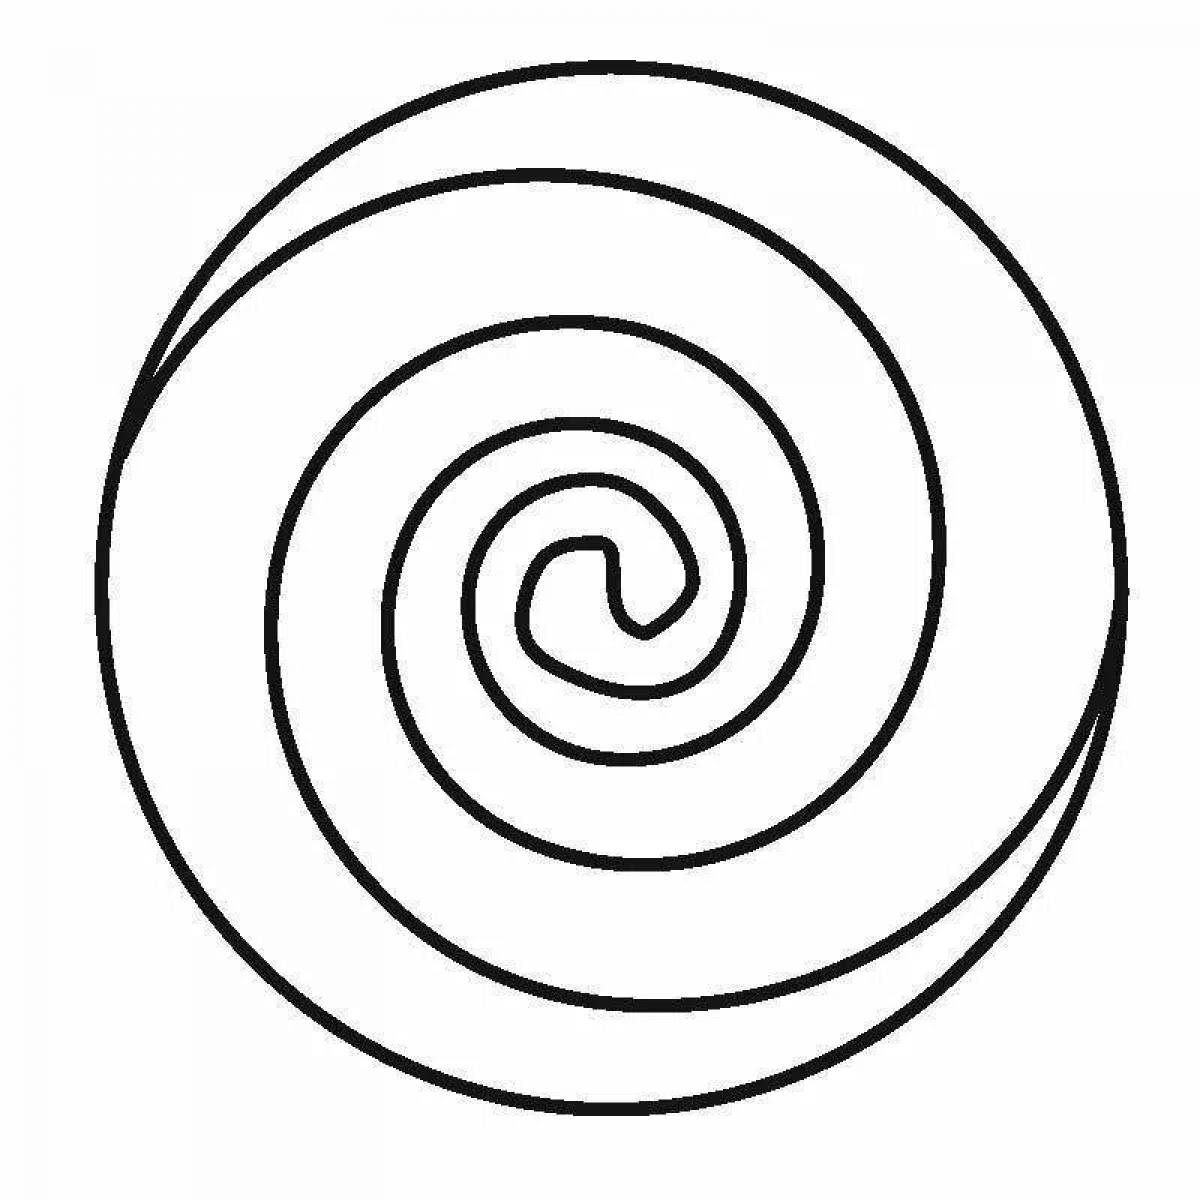 Fun circular spiral create coloring page